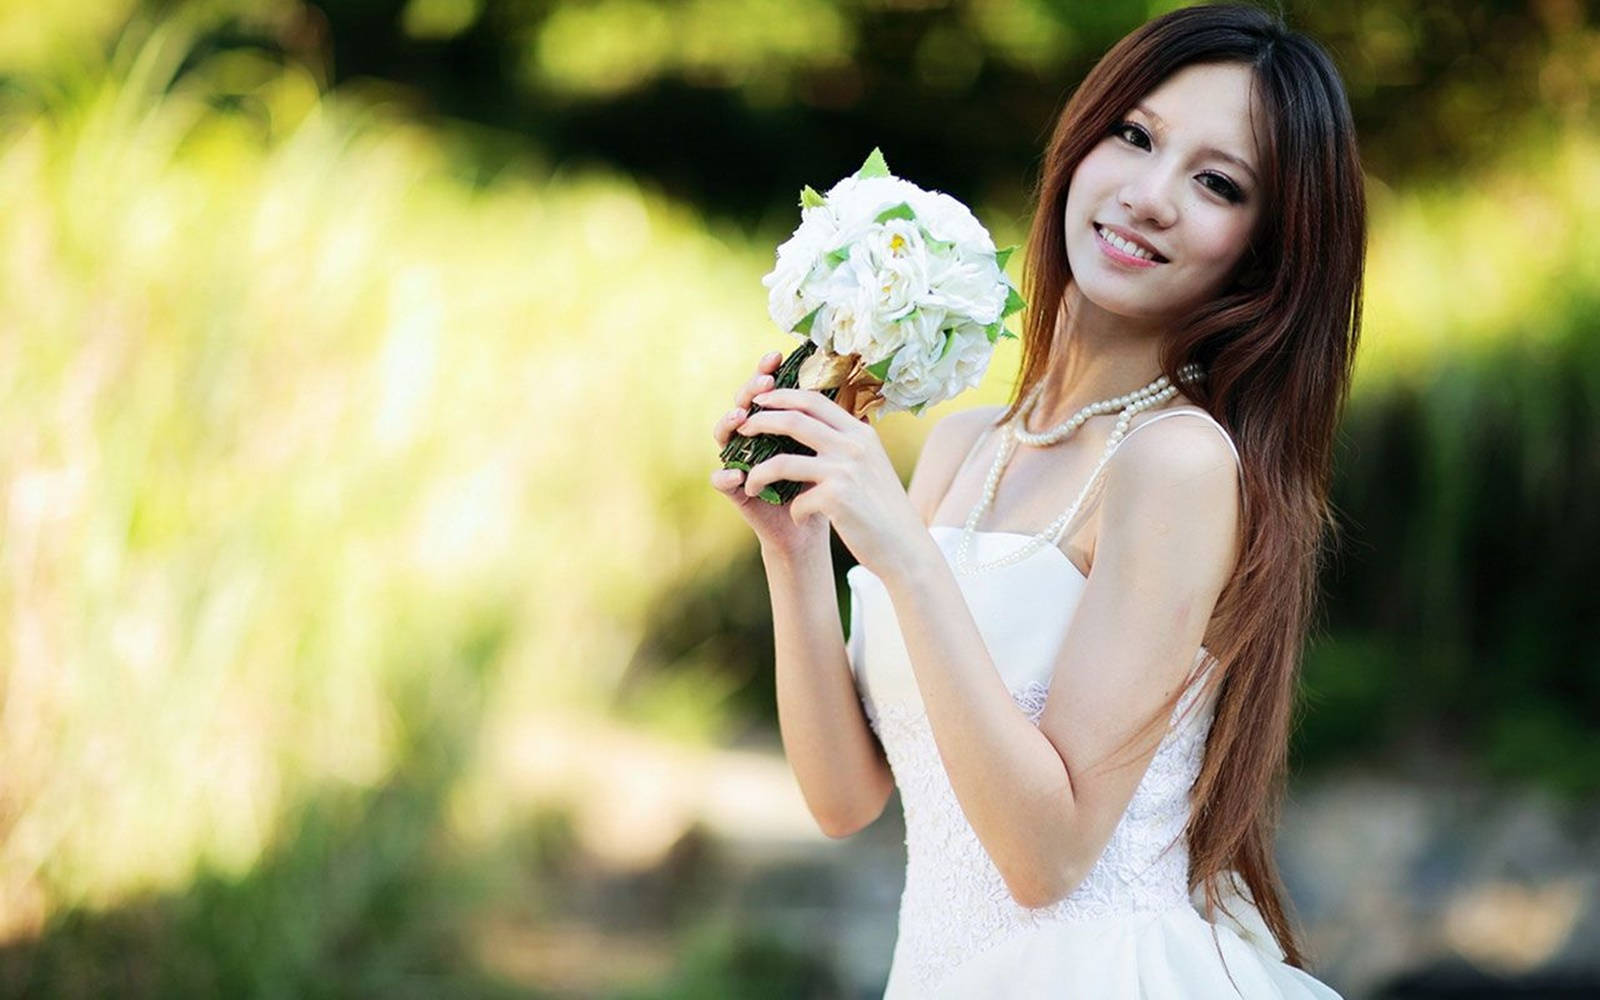 Chinese Girl Wedding Dress Background